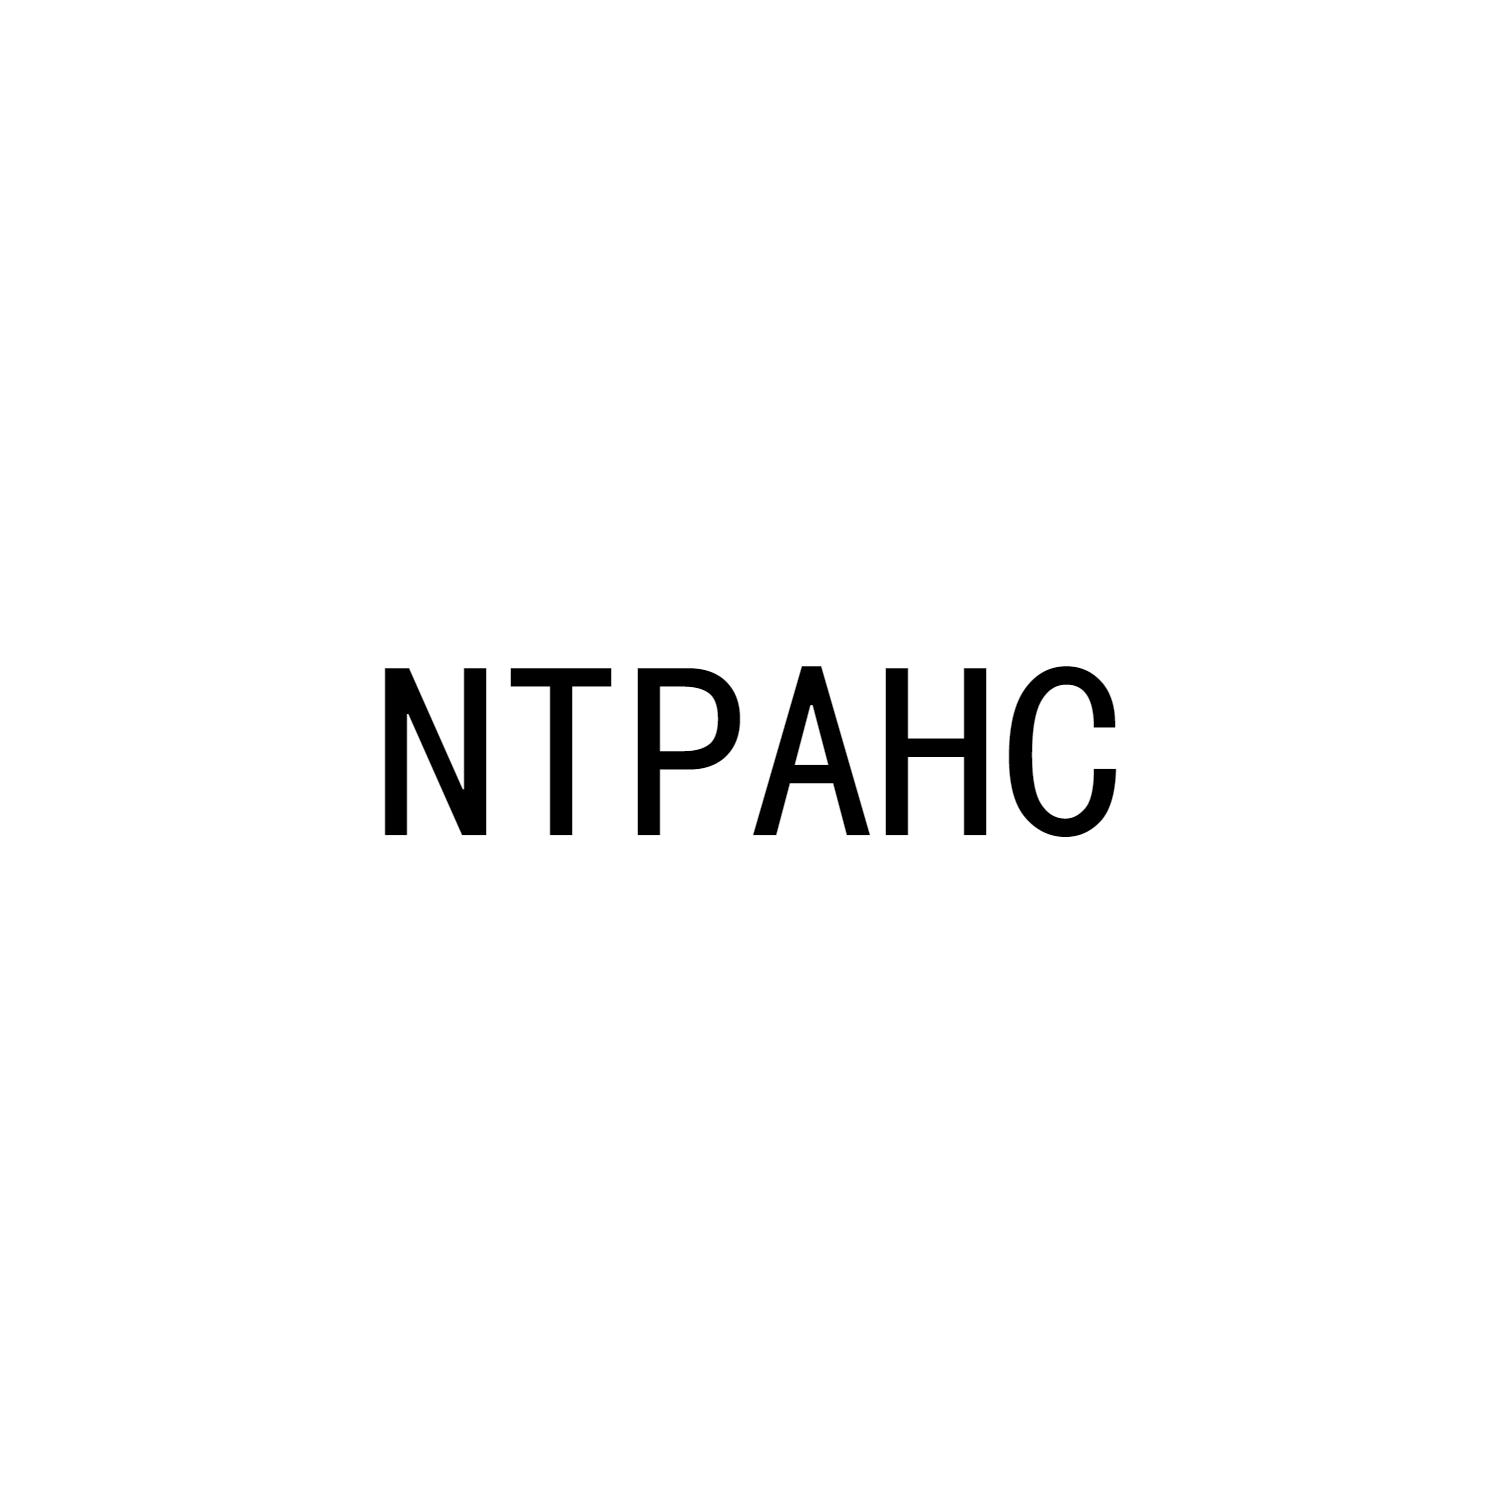 NTPAHC